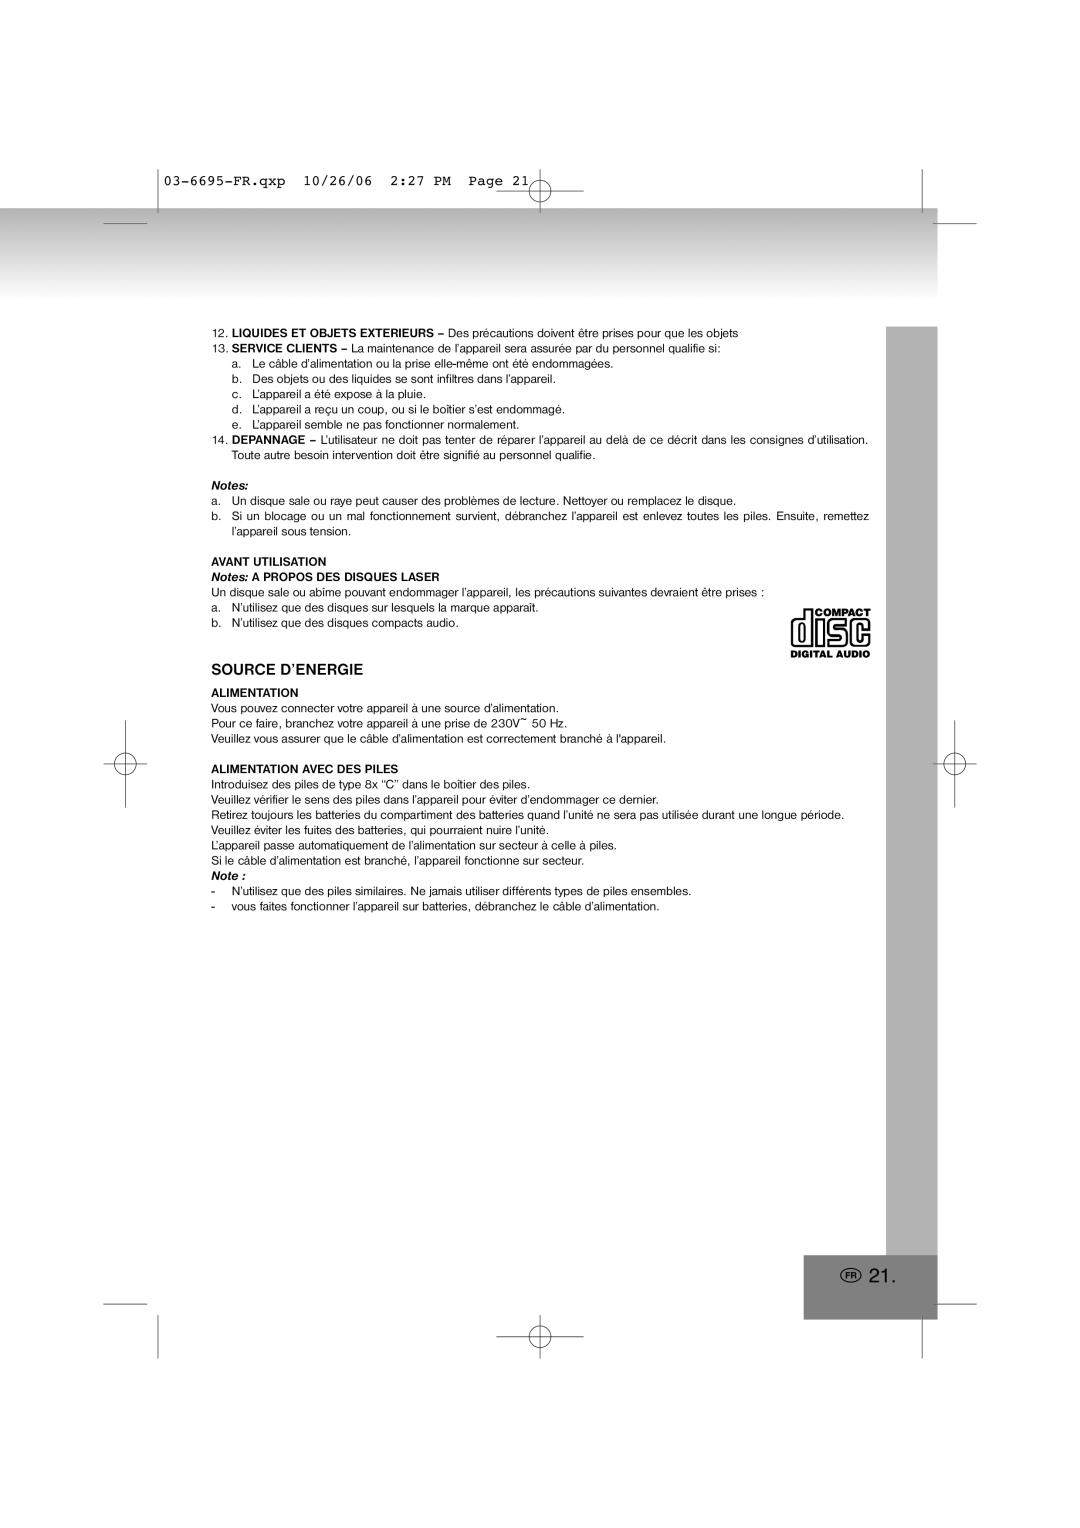 Elta manual Source D’Energie, 03-6695-FR.qxp10/26/06 2 27 PM Page 